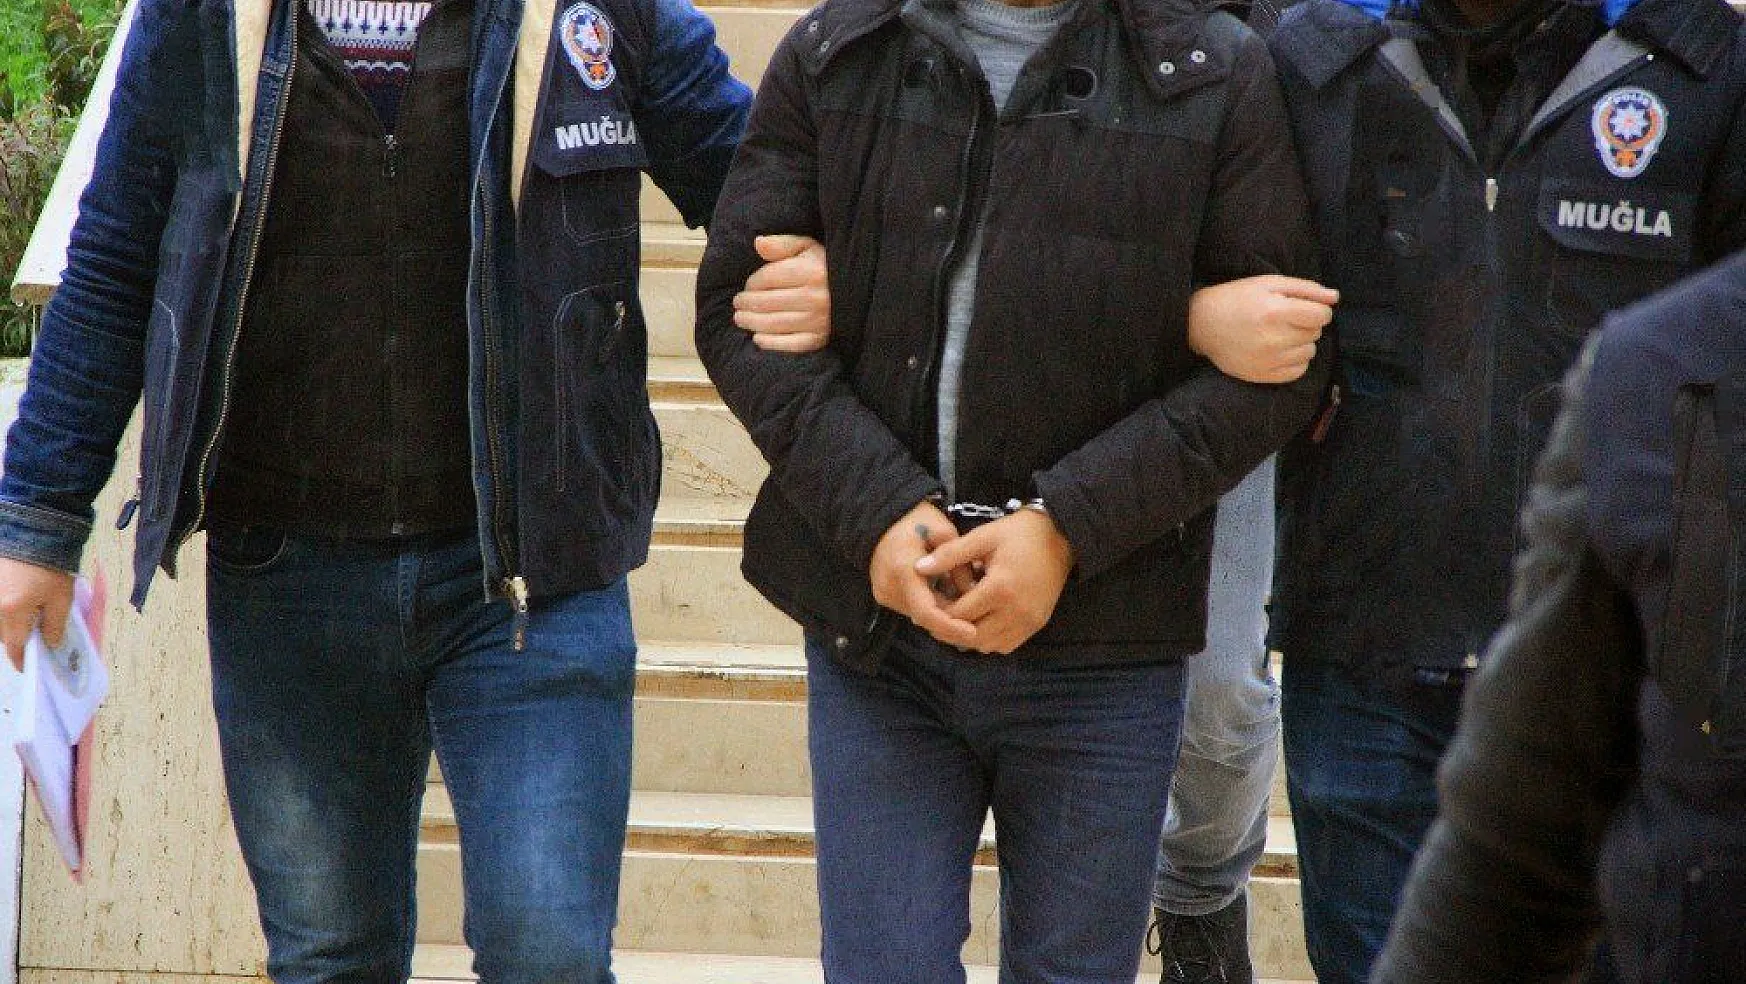 Muğla'da 15 Muvazzaf'a gözaltı kararı